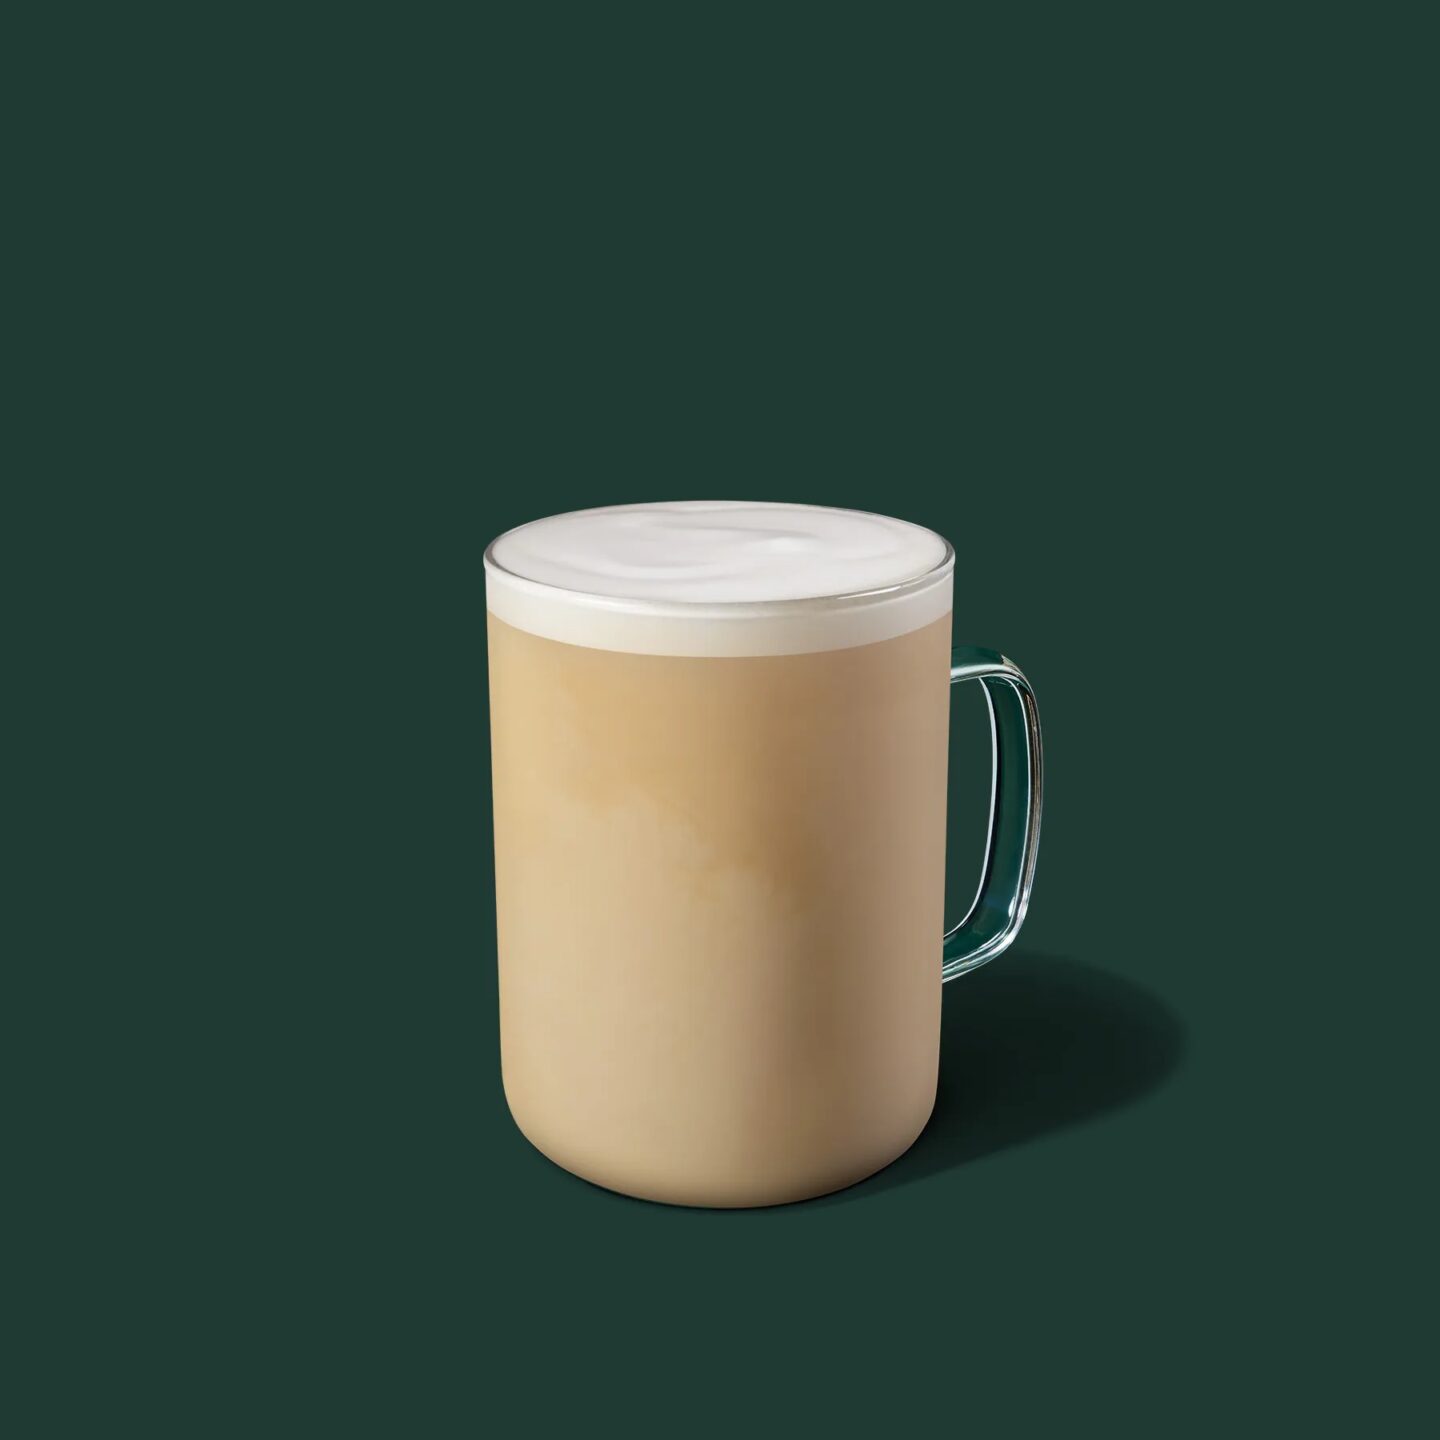 starbucks london fog tea latte